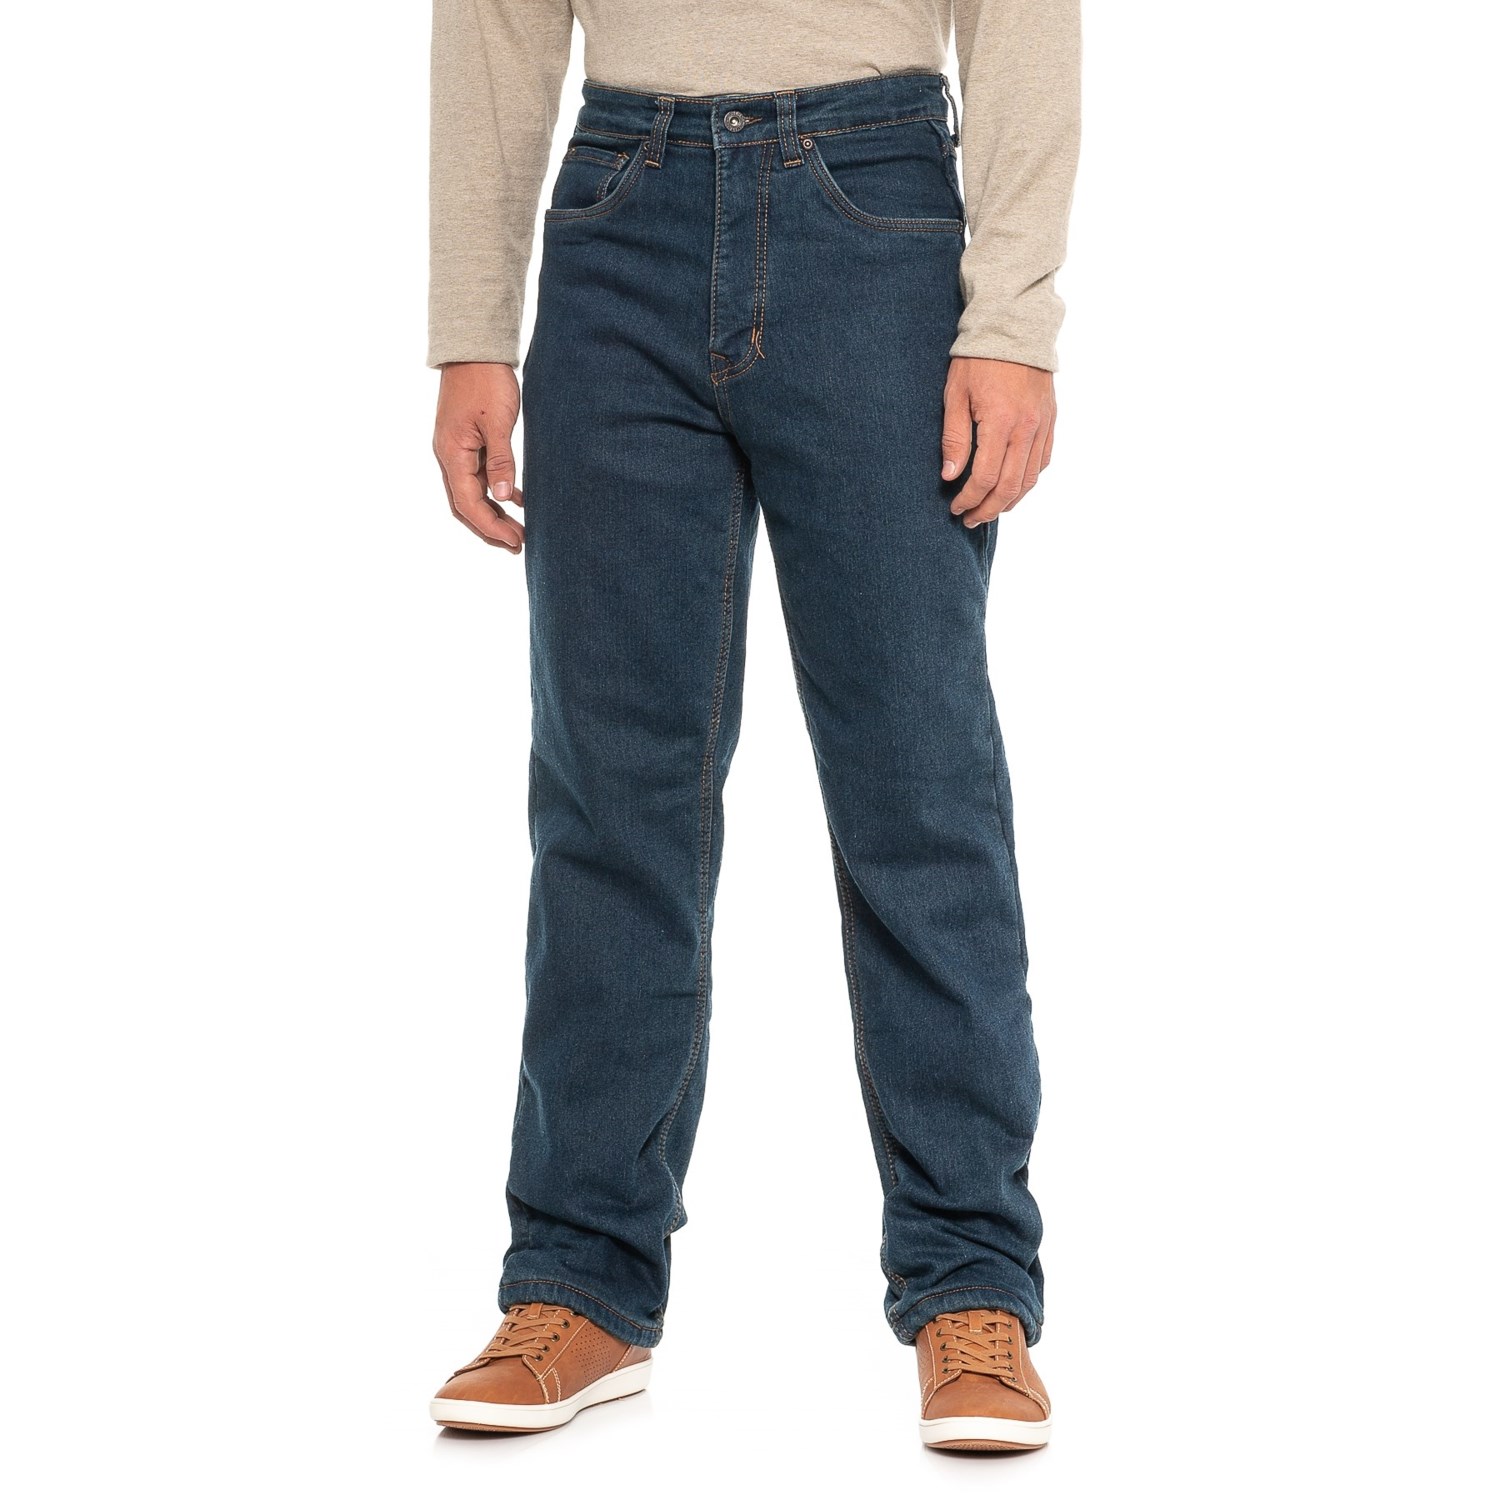 Smiths Work Polar Fleece-Lined Jeans (For Men) - Save 55%